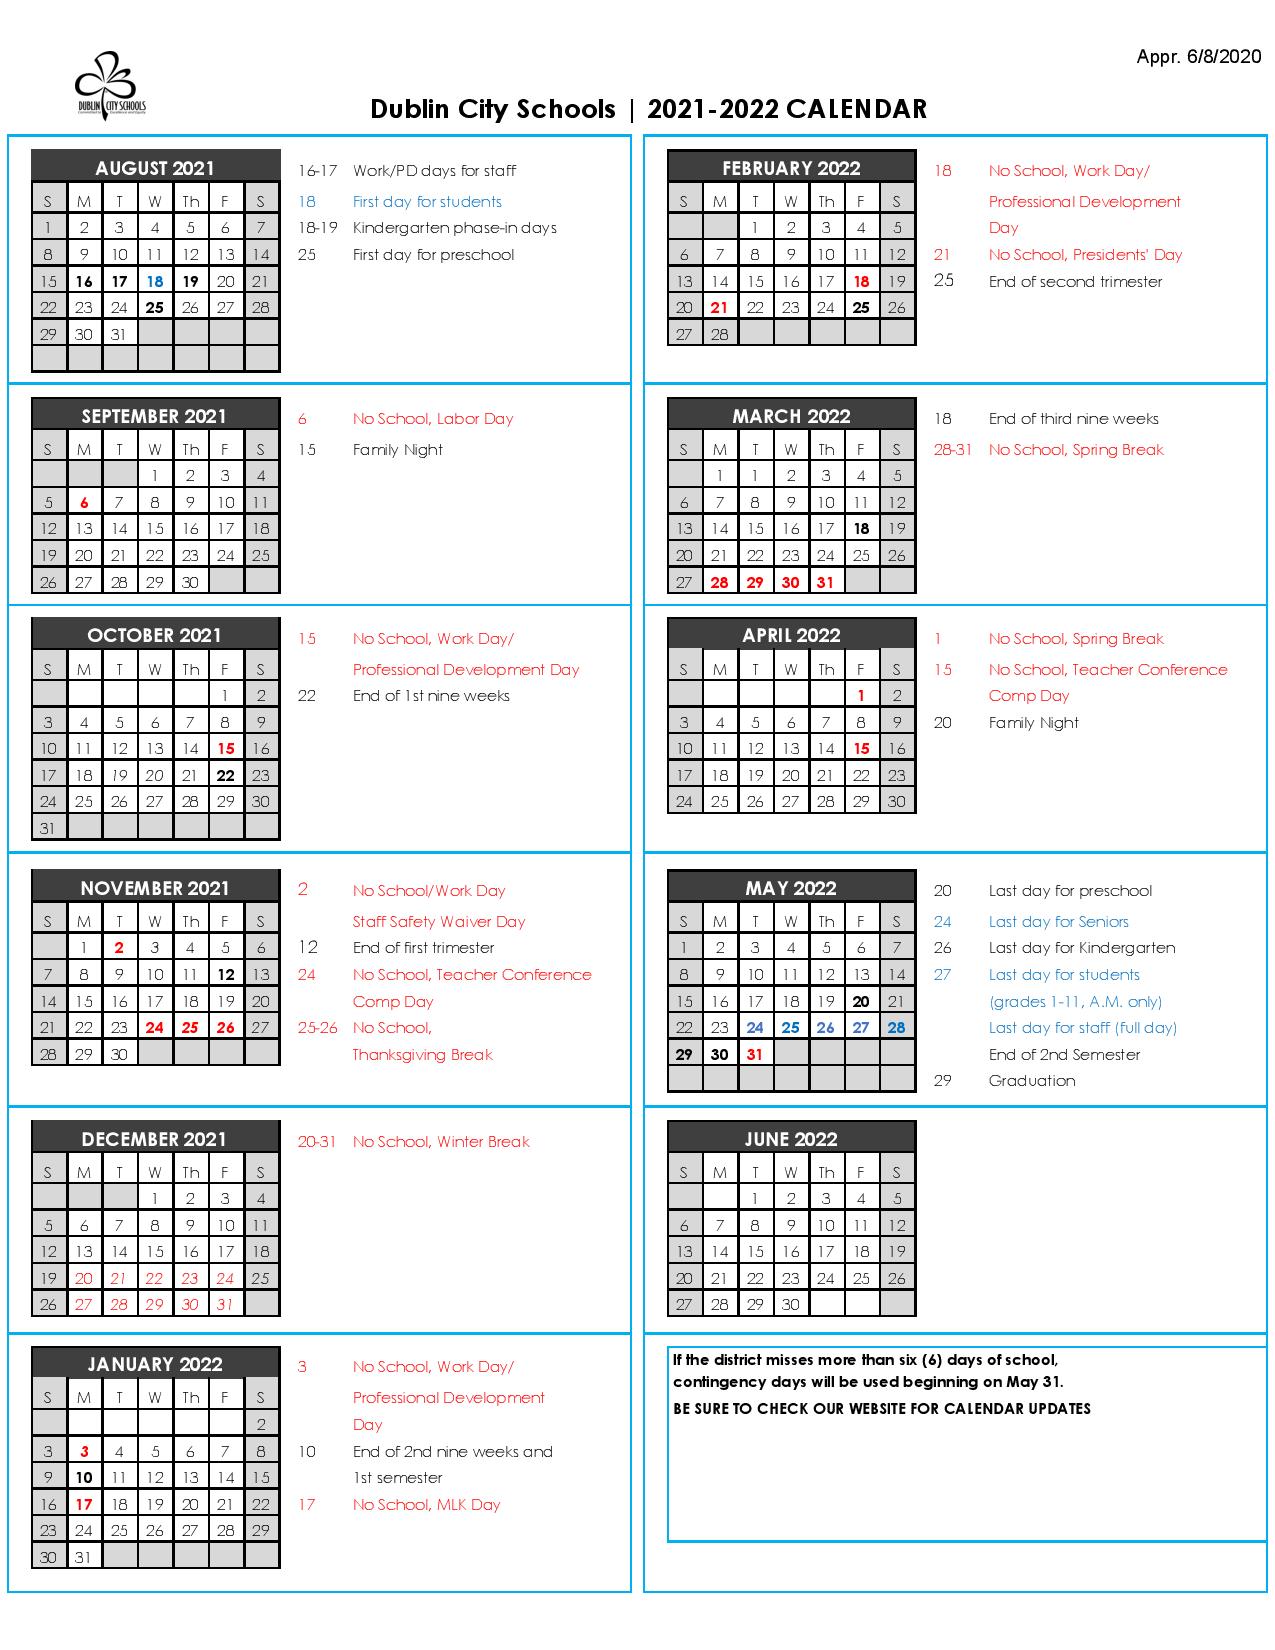 dublin-city-schools-calendar-holidays-2021-2022-in-pdf